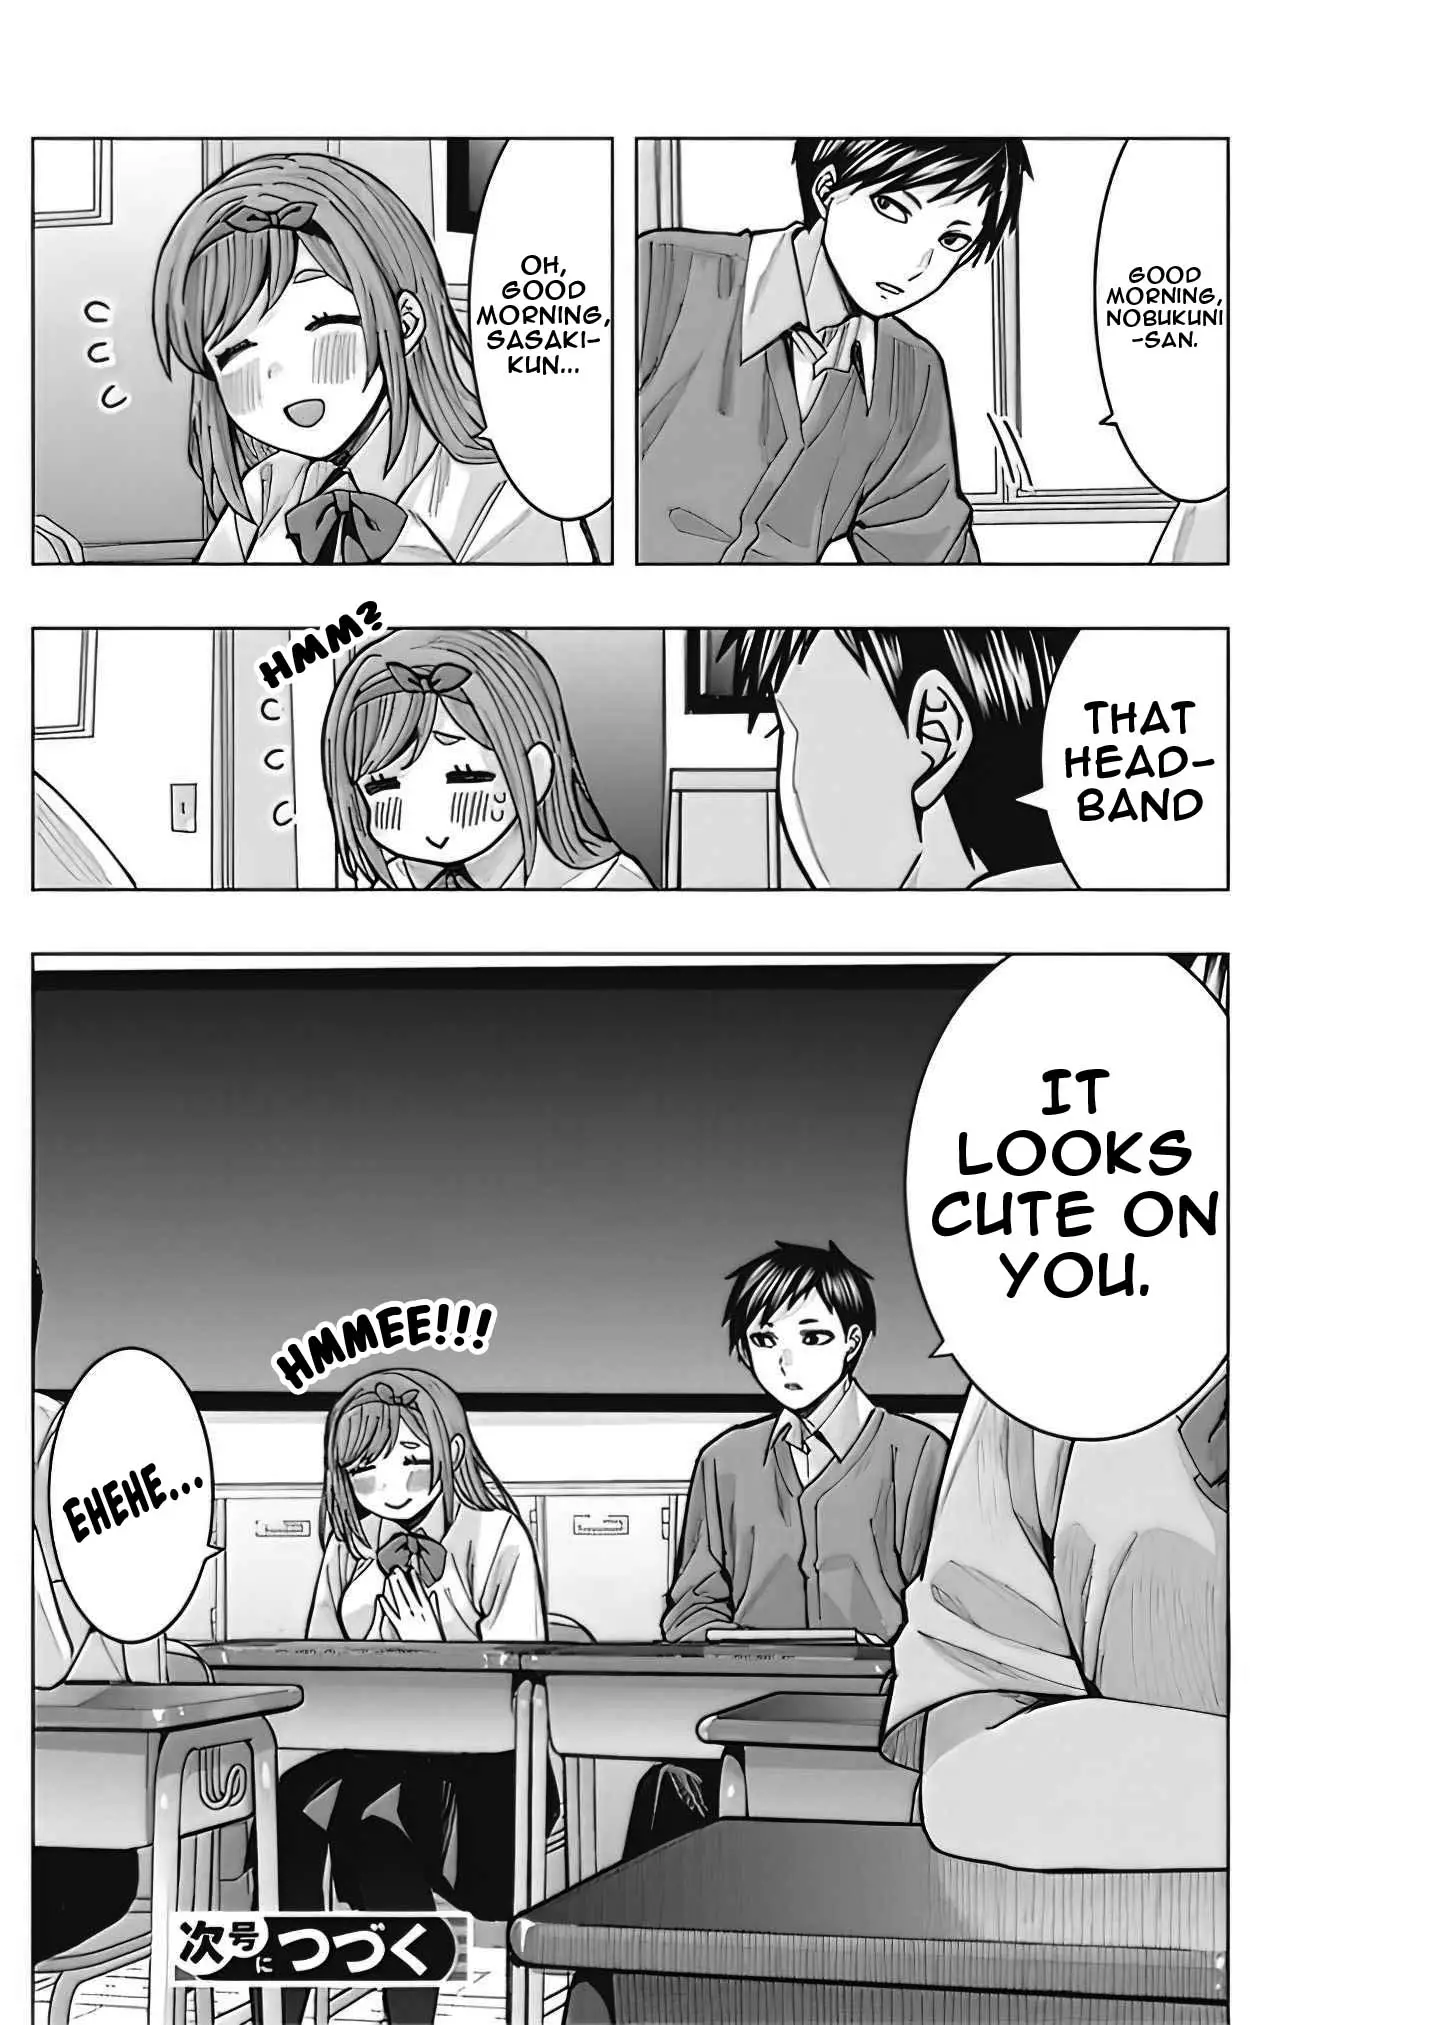 "nobukuni-San" Does She Like Me? - 3 page 15